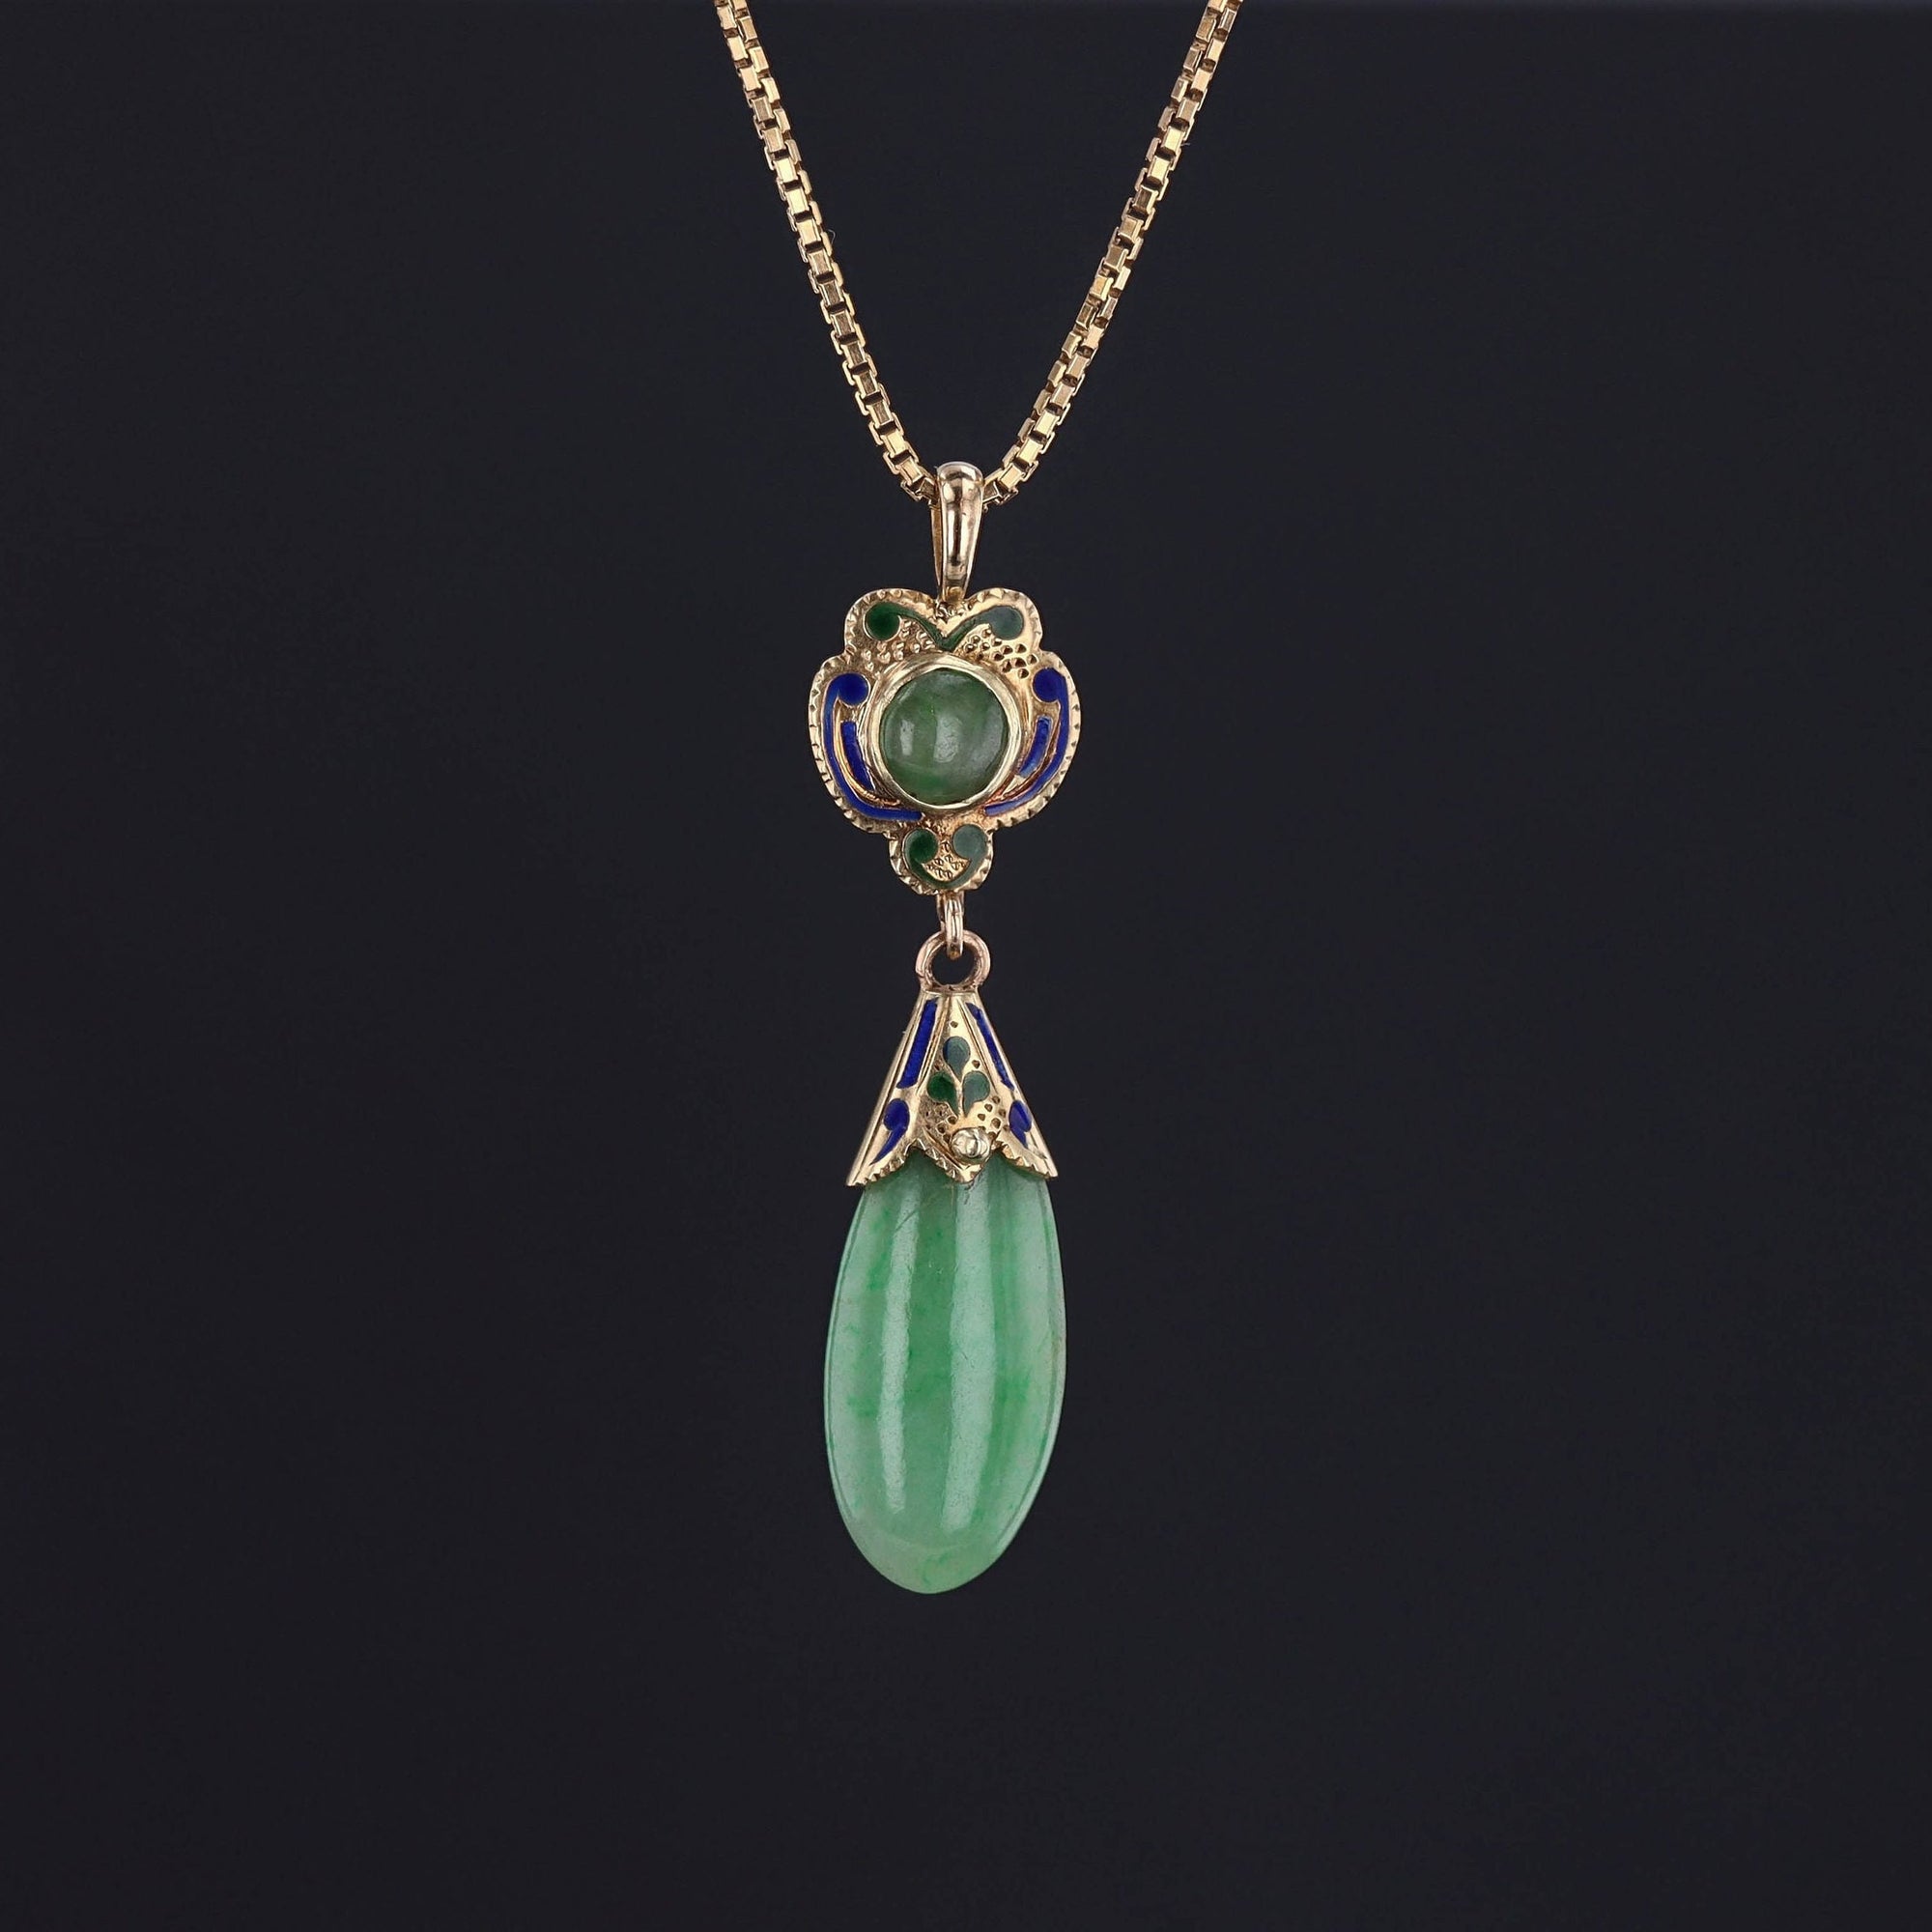 Vintage 14k Gold Jade and Enamel Pendant on Optional 14k Chain